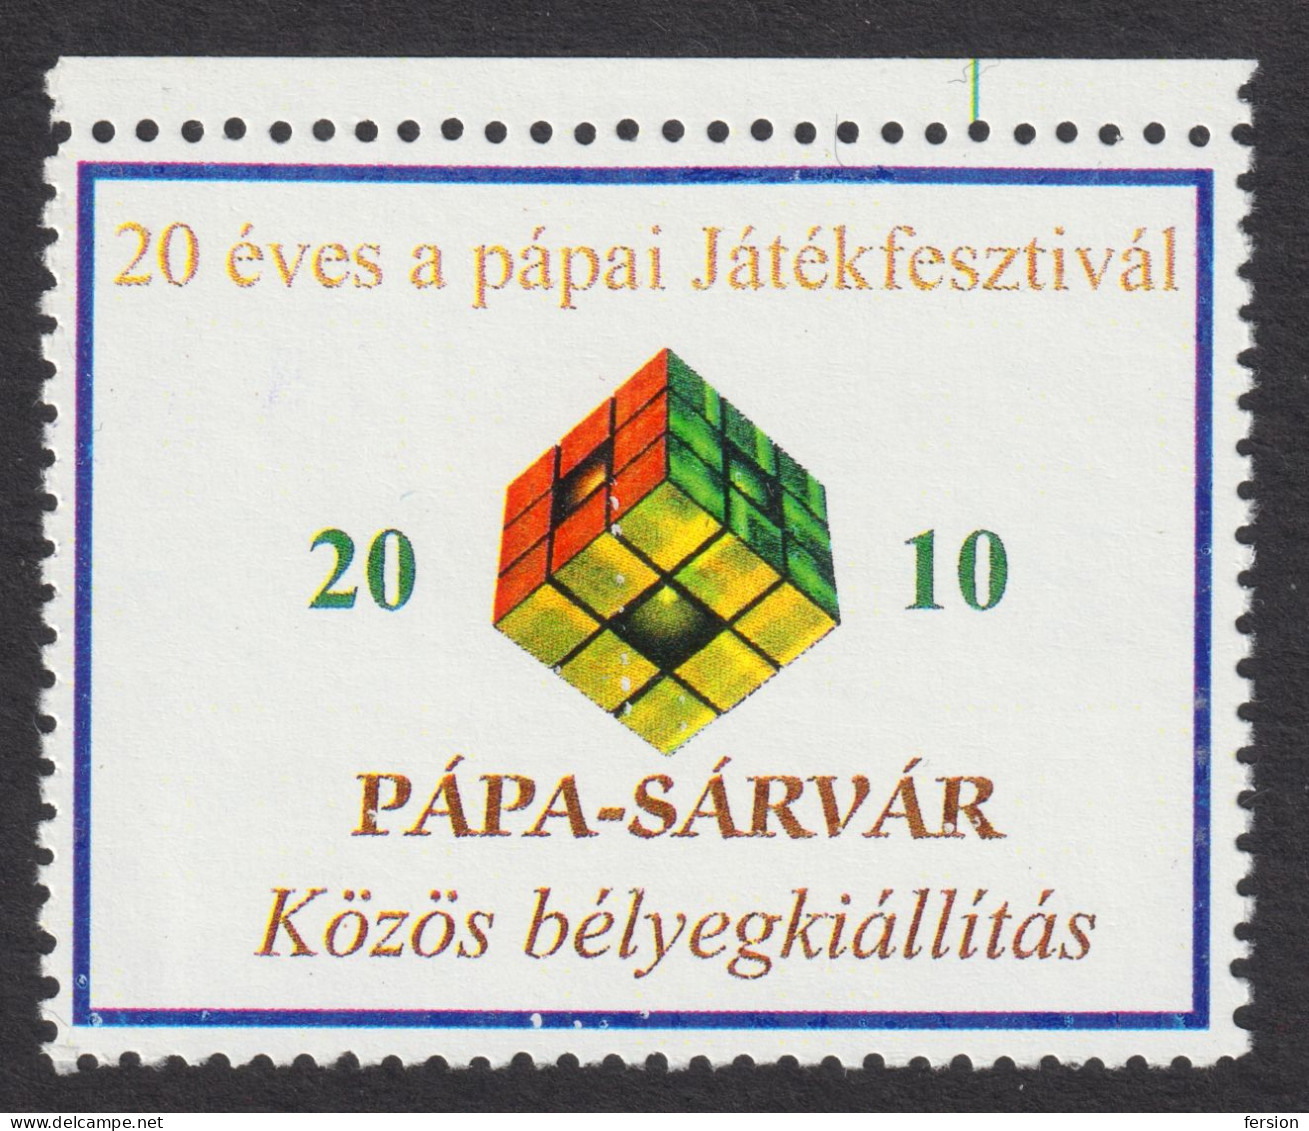 Rubik's Rubik Magic Cube TOY PLAY - Pápa / Sárvár Game Festival - LABEL CINDERELLA VIGNETTE Hungary - Ohne Zuordnung